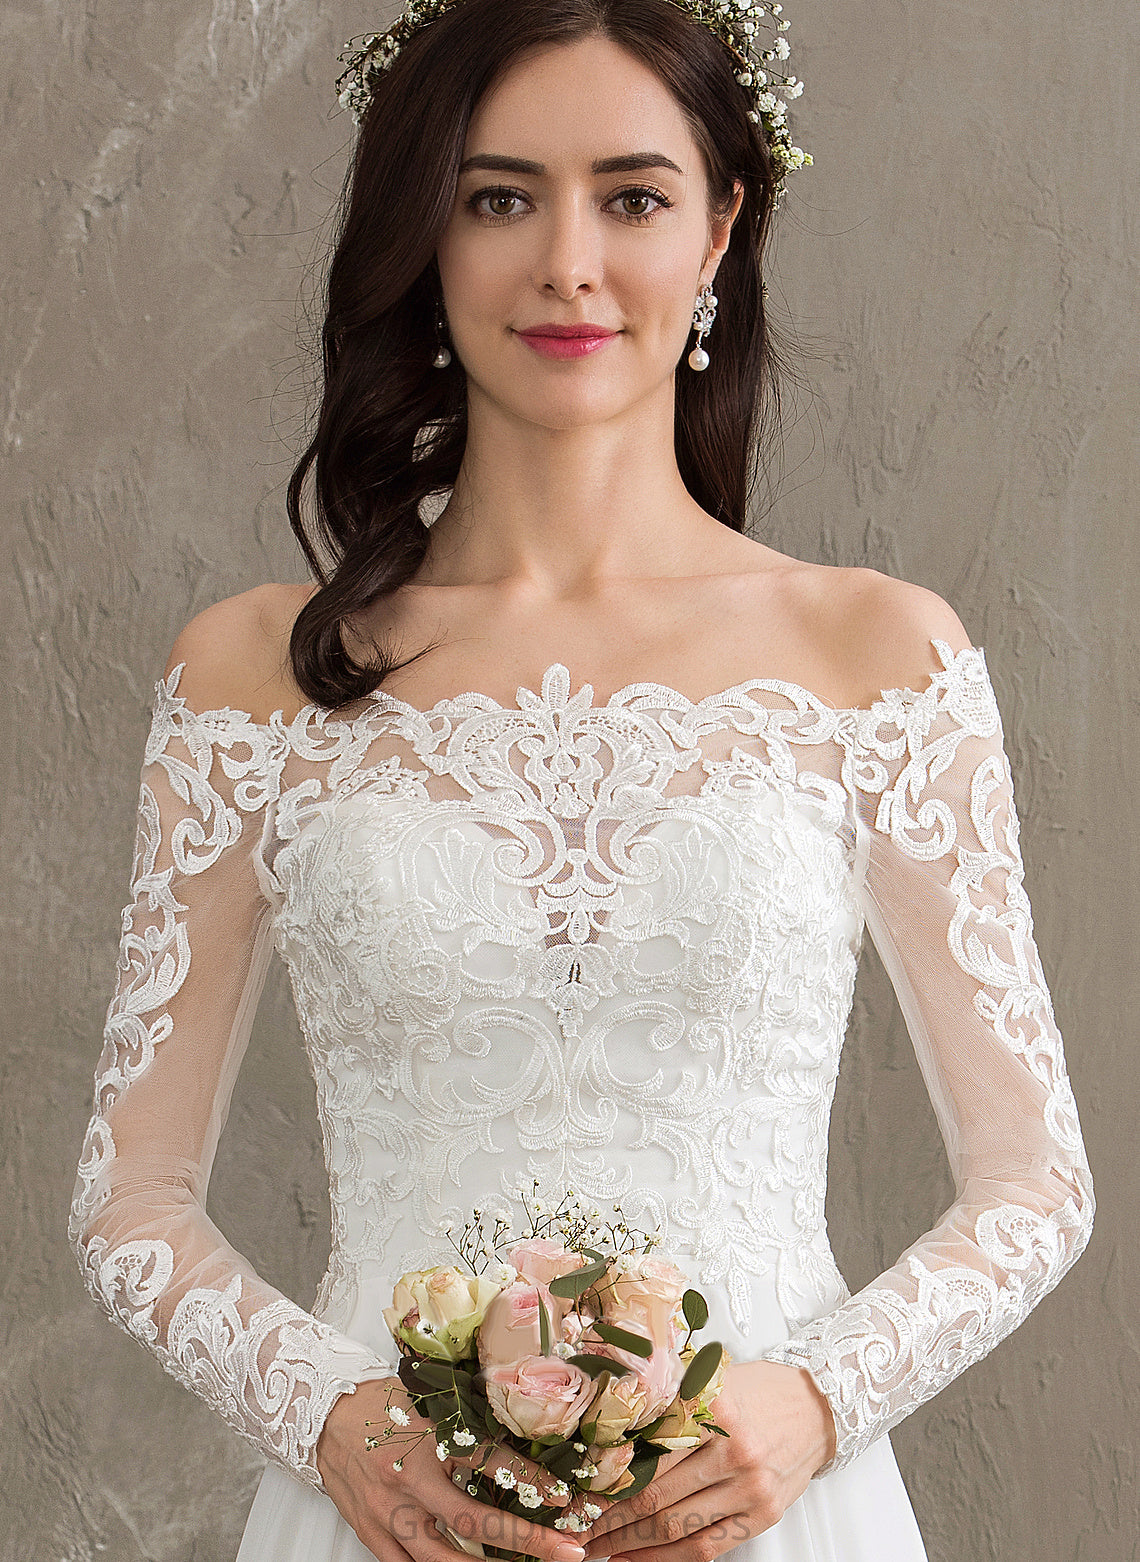 Lace Wedding Dresses A-Line Peggie Off-the-Shoulder Wedding Dress Chiffon Floor-Length